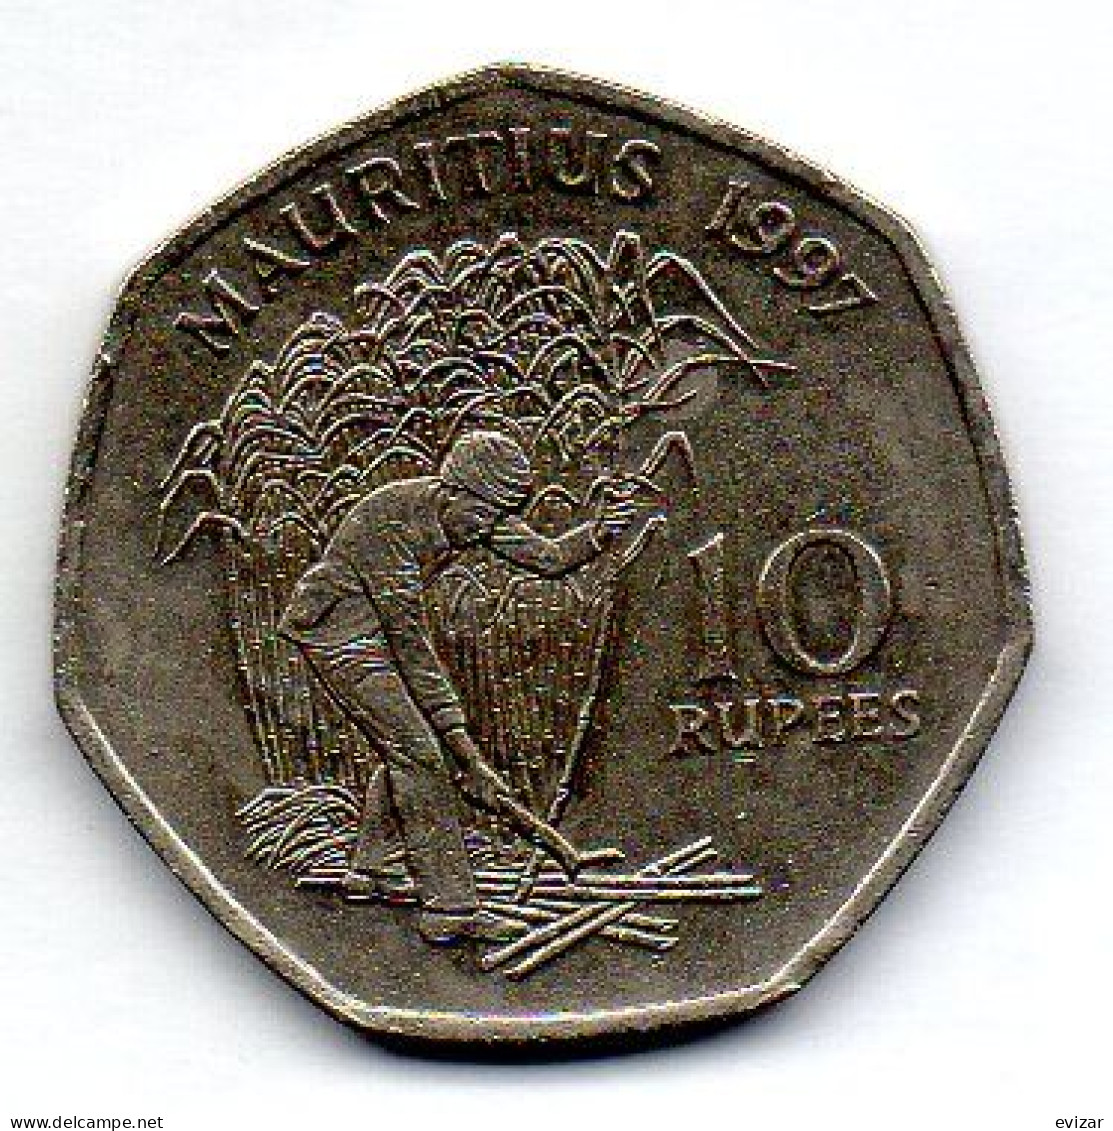 MAURITIUS, 10 Rupees, Copper-Nickel, Year 1997, KM # 61 - Mauritius